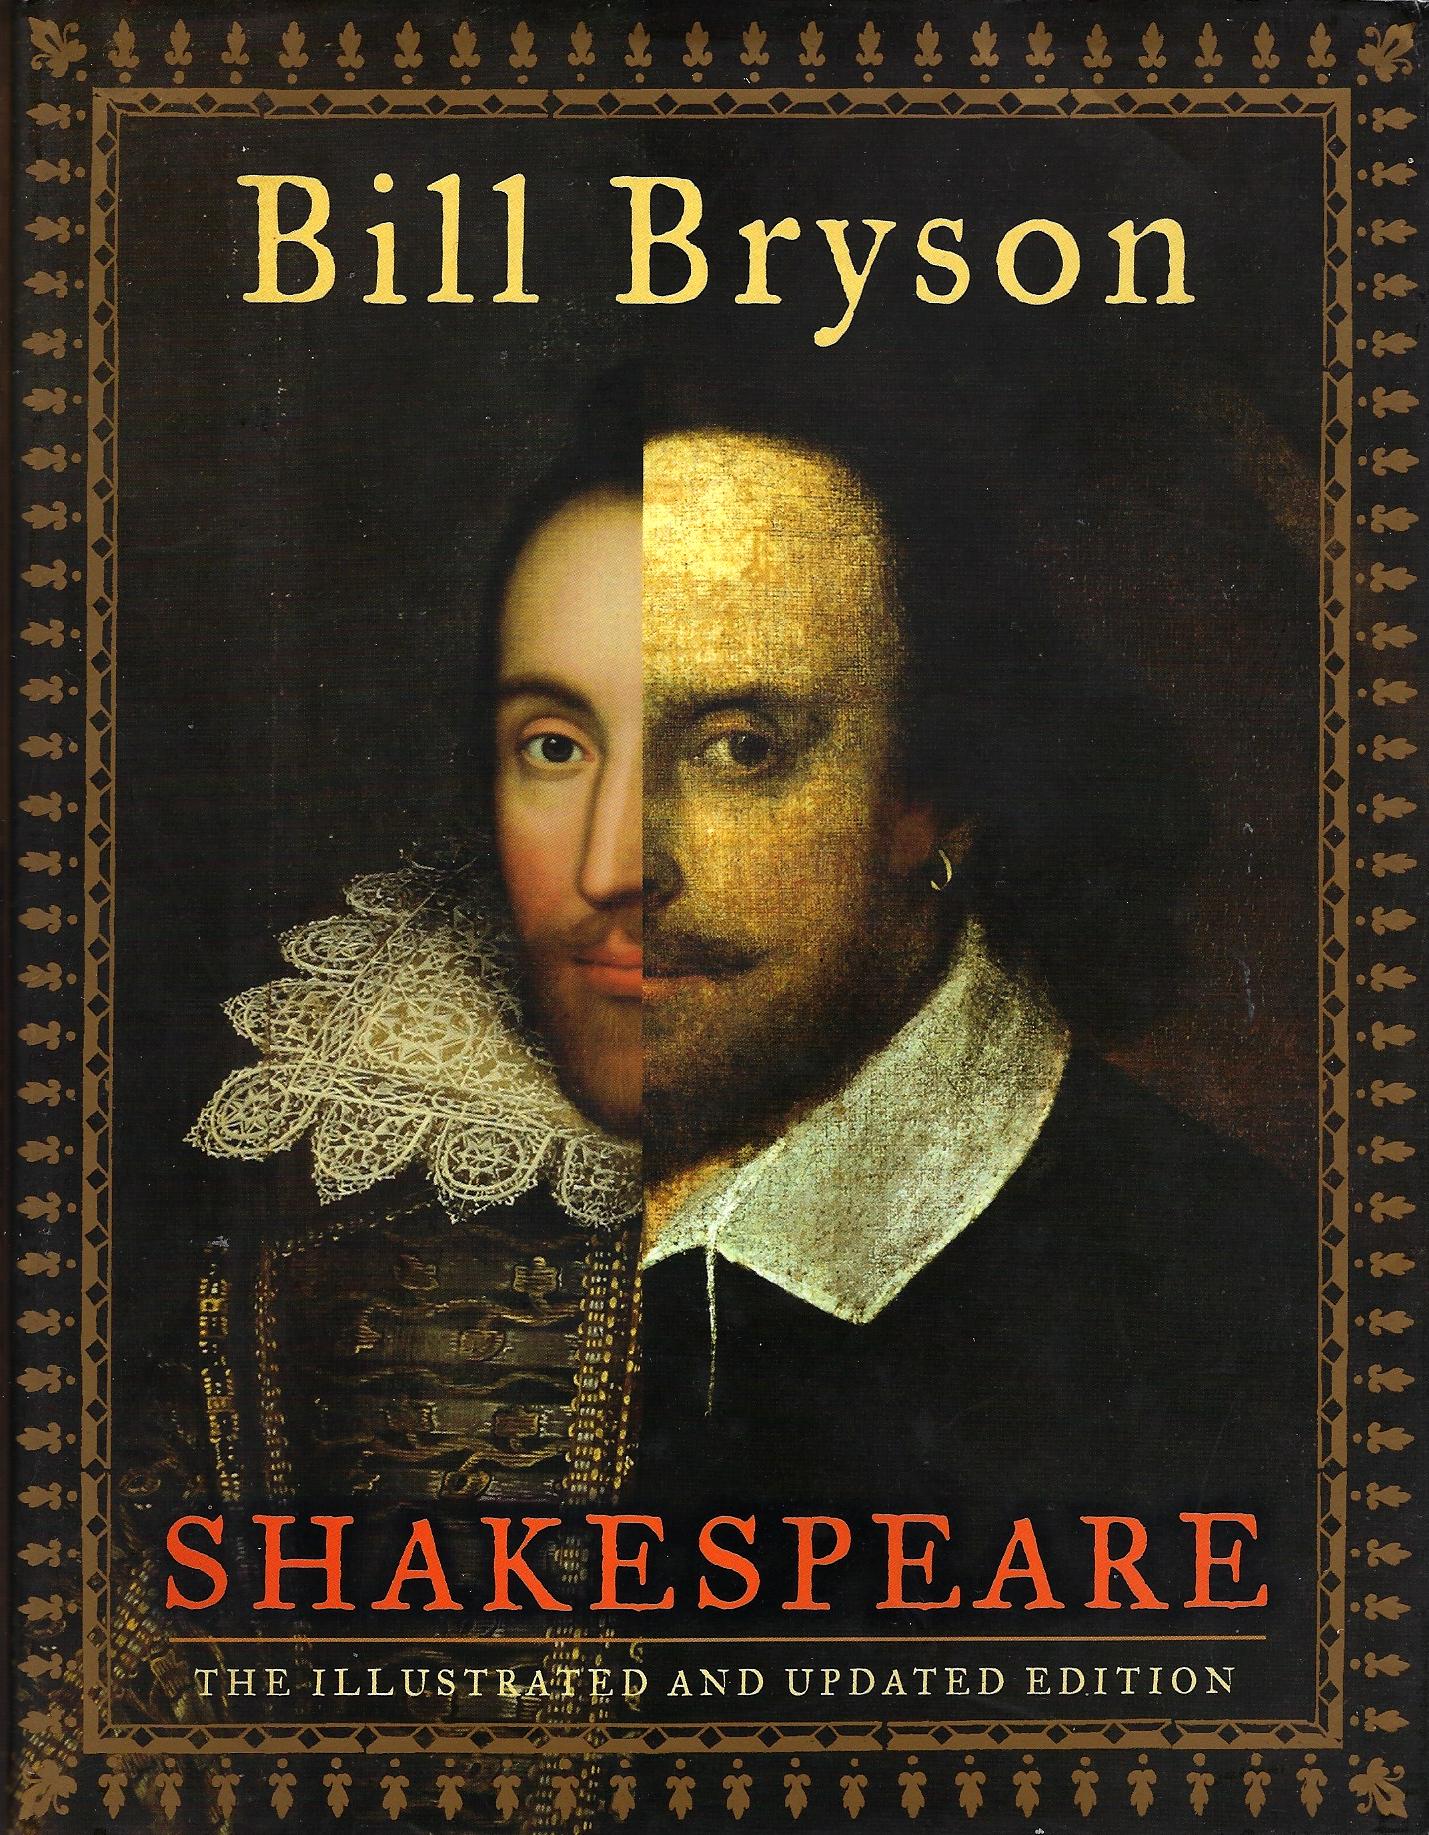 Shakespeare's world. Билл Шекспир. Уильям Шекспир марка. Билл Брайсон Шекспир весь мир театр. Bryson Bill "the body".